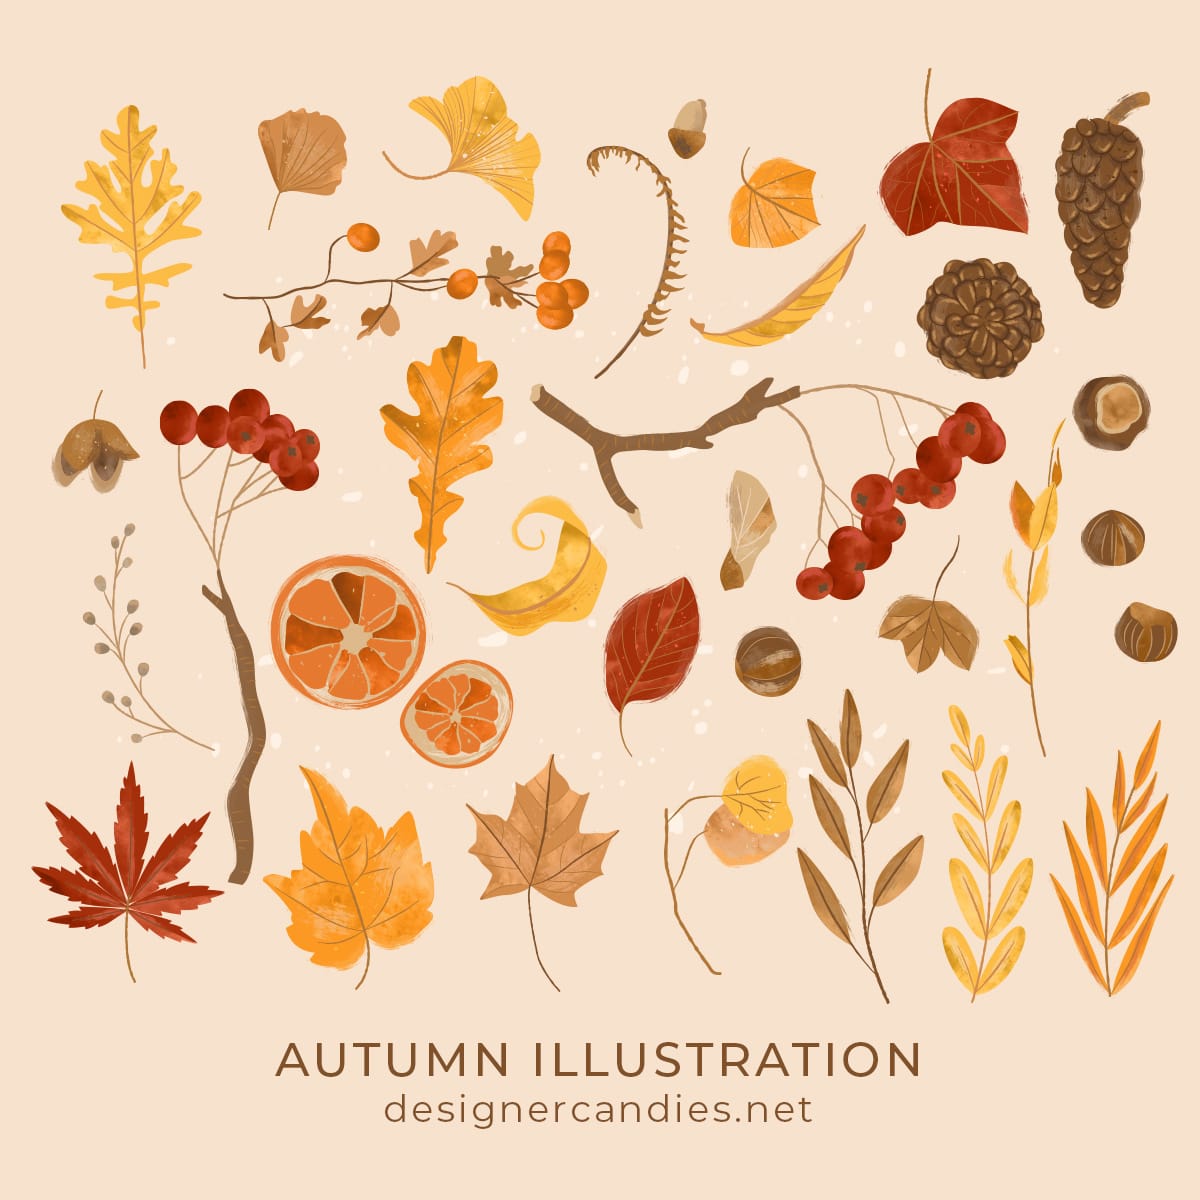 Autumn/Fall Vector Illustrations